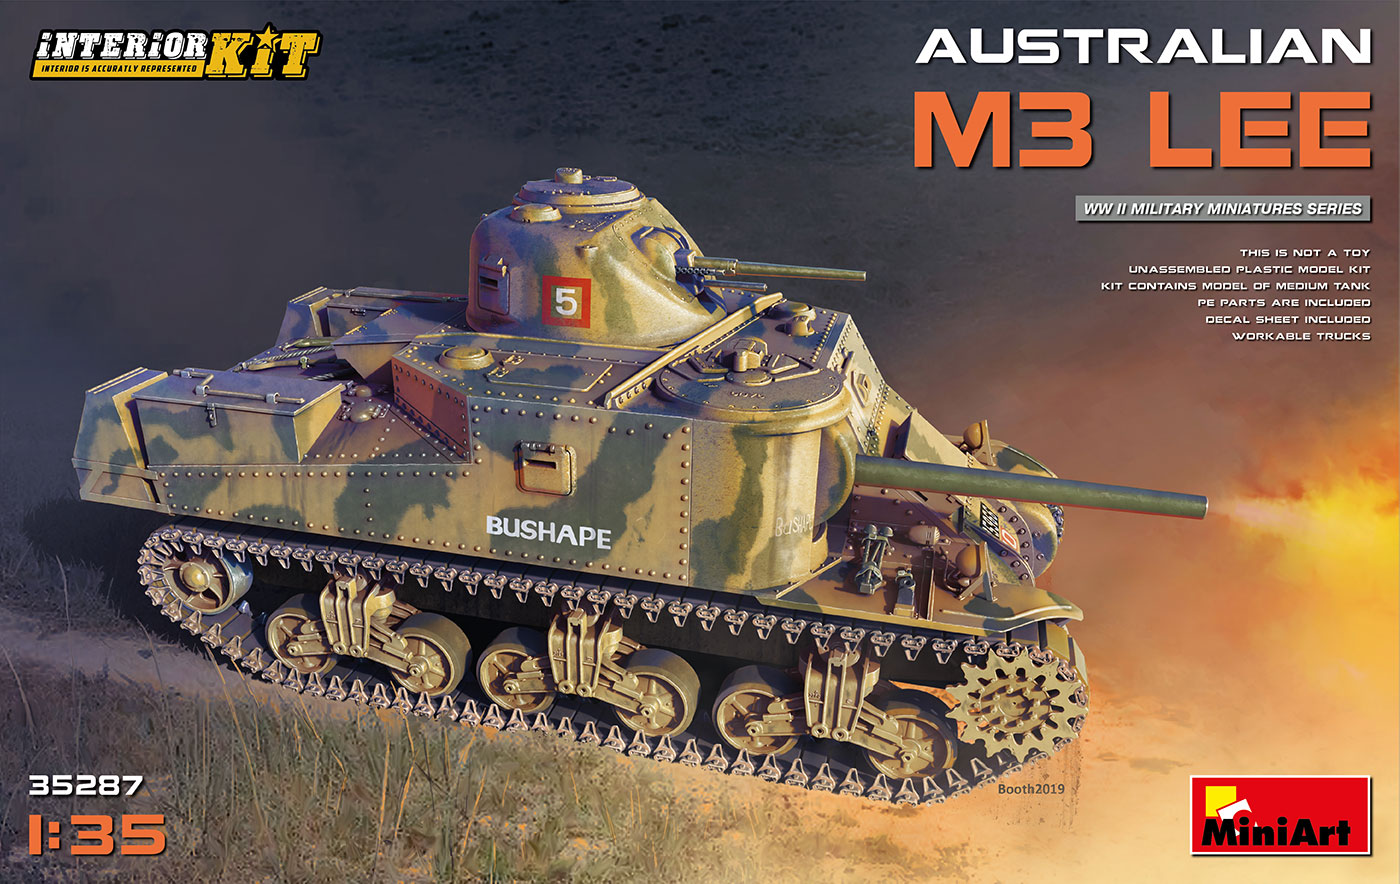 35287  техника и вооружение  AUSTRALIAN M3 LEE. INTERIOR KIT  (1:35)